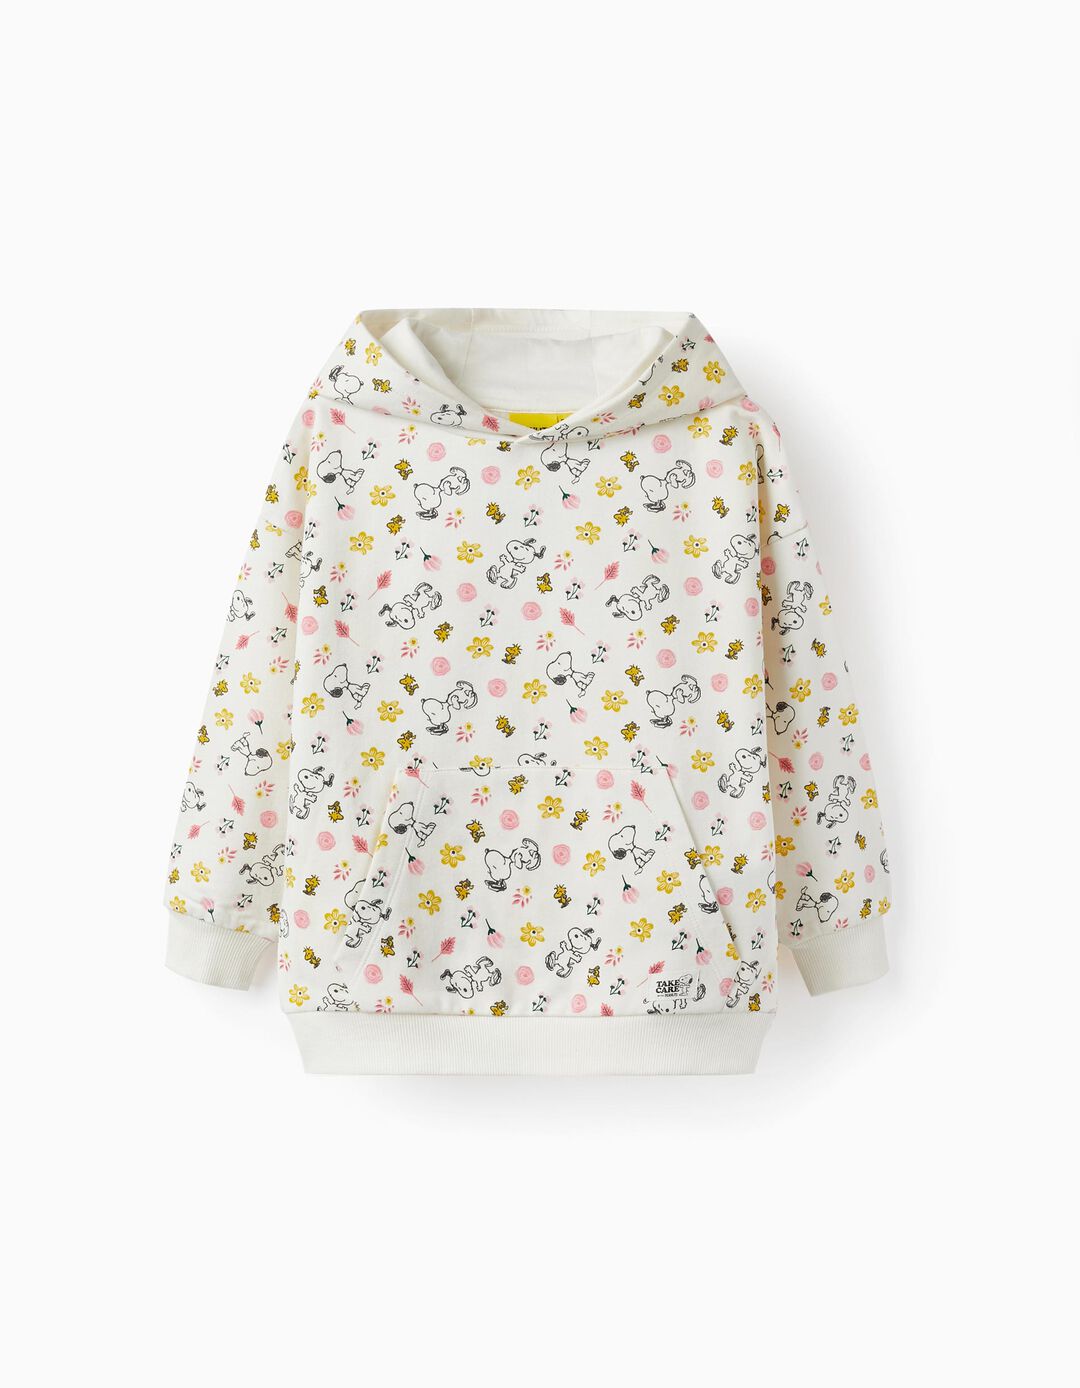 Cotton Sweatshirt for Girls, 'Snoopy', White